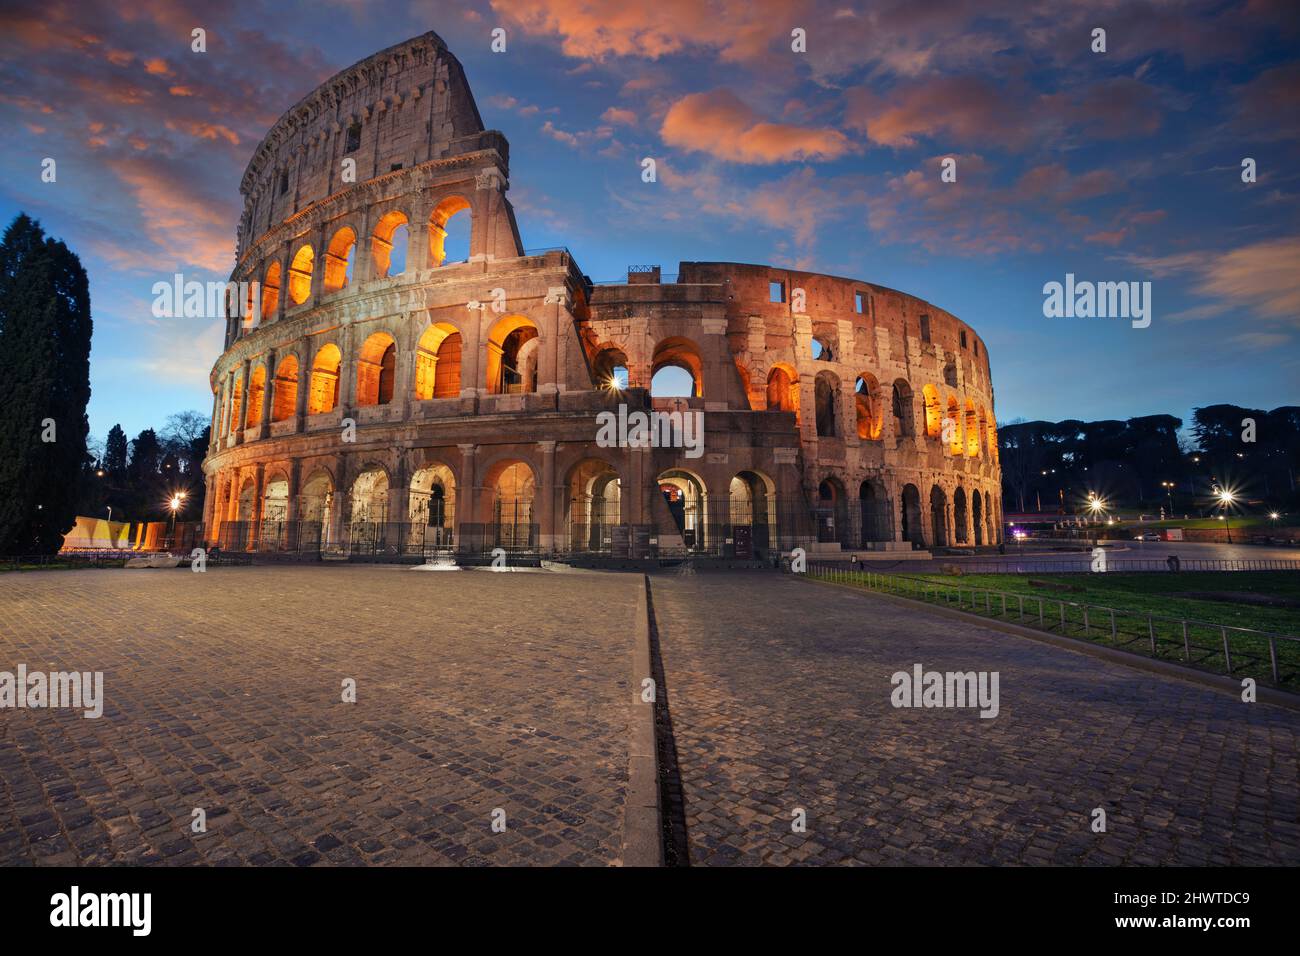 Coliseo, Roma, Italia. Imagen del icónico Coliseo en Roma, Italia, al hermoso amanecer. Foto de stock